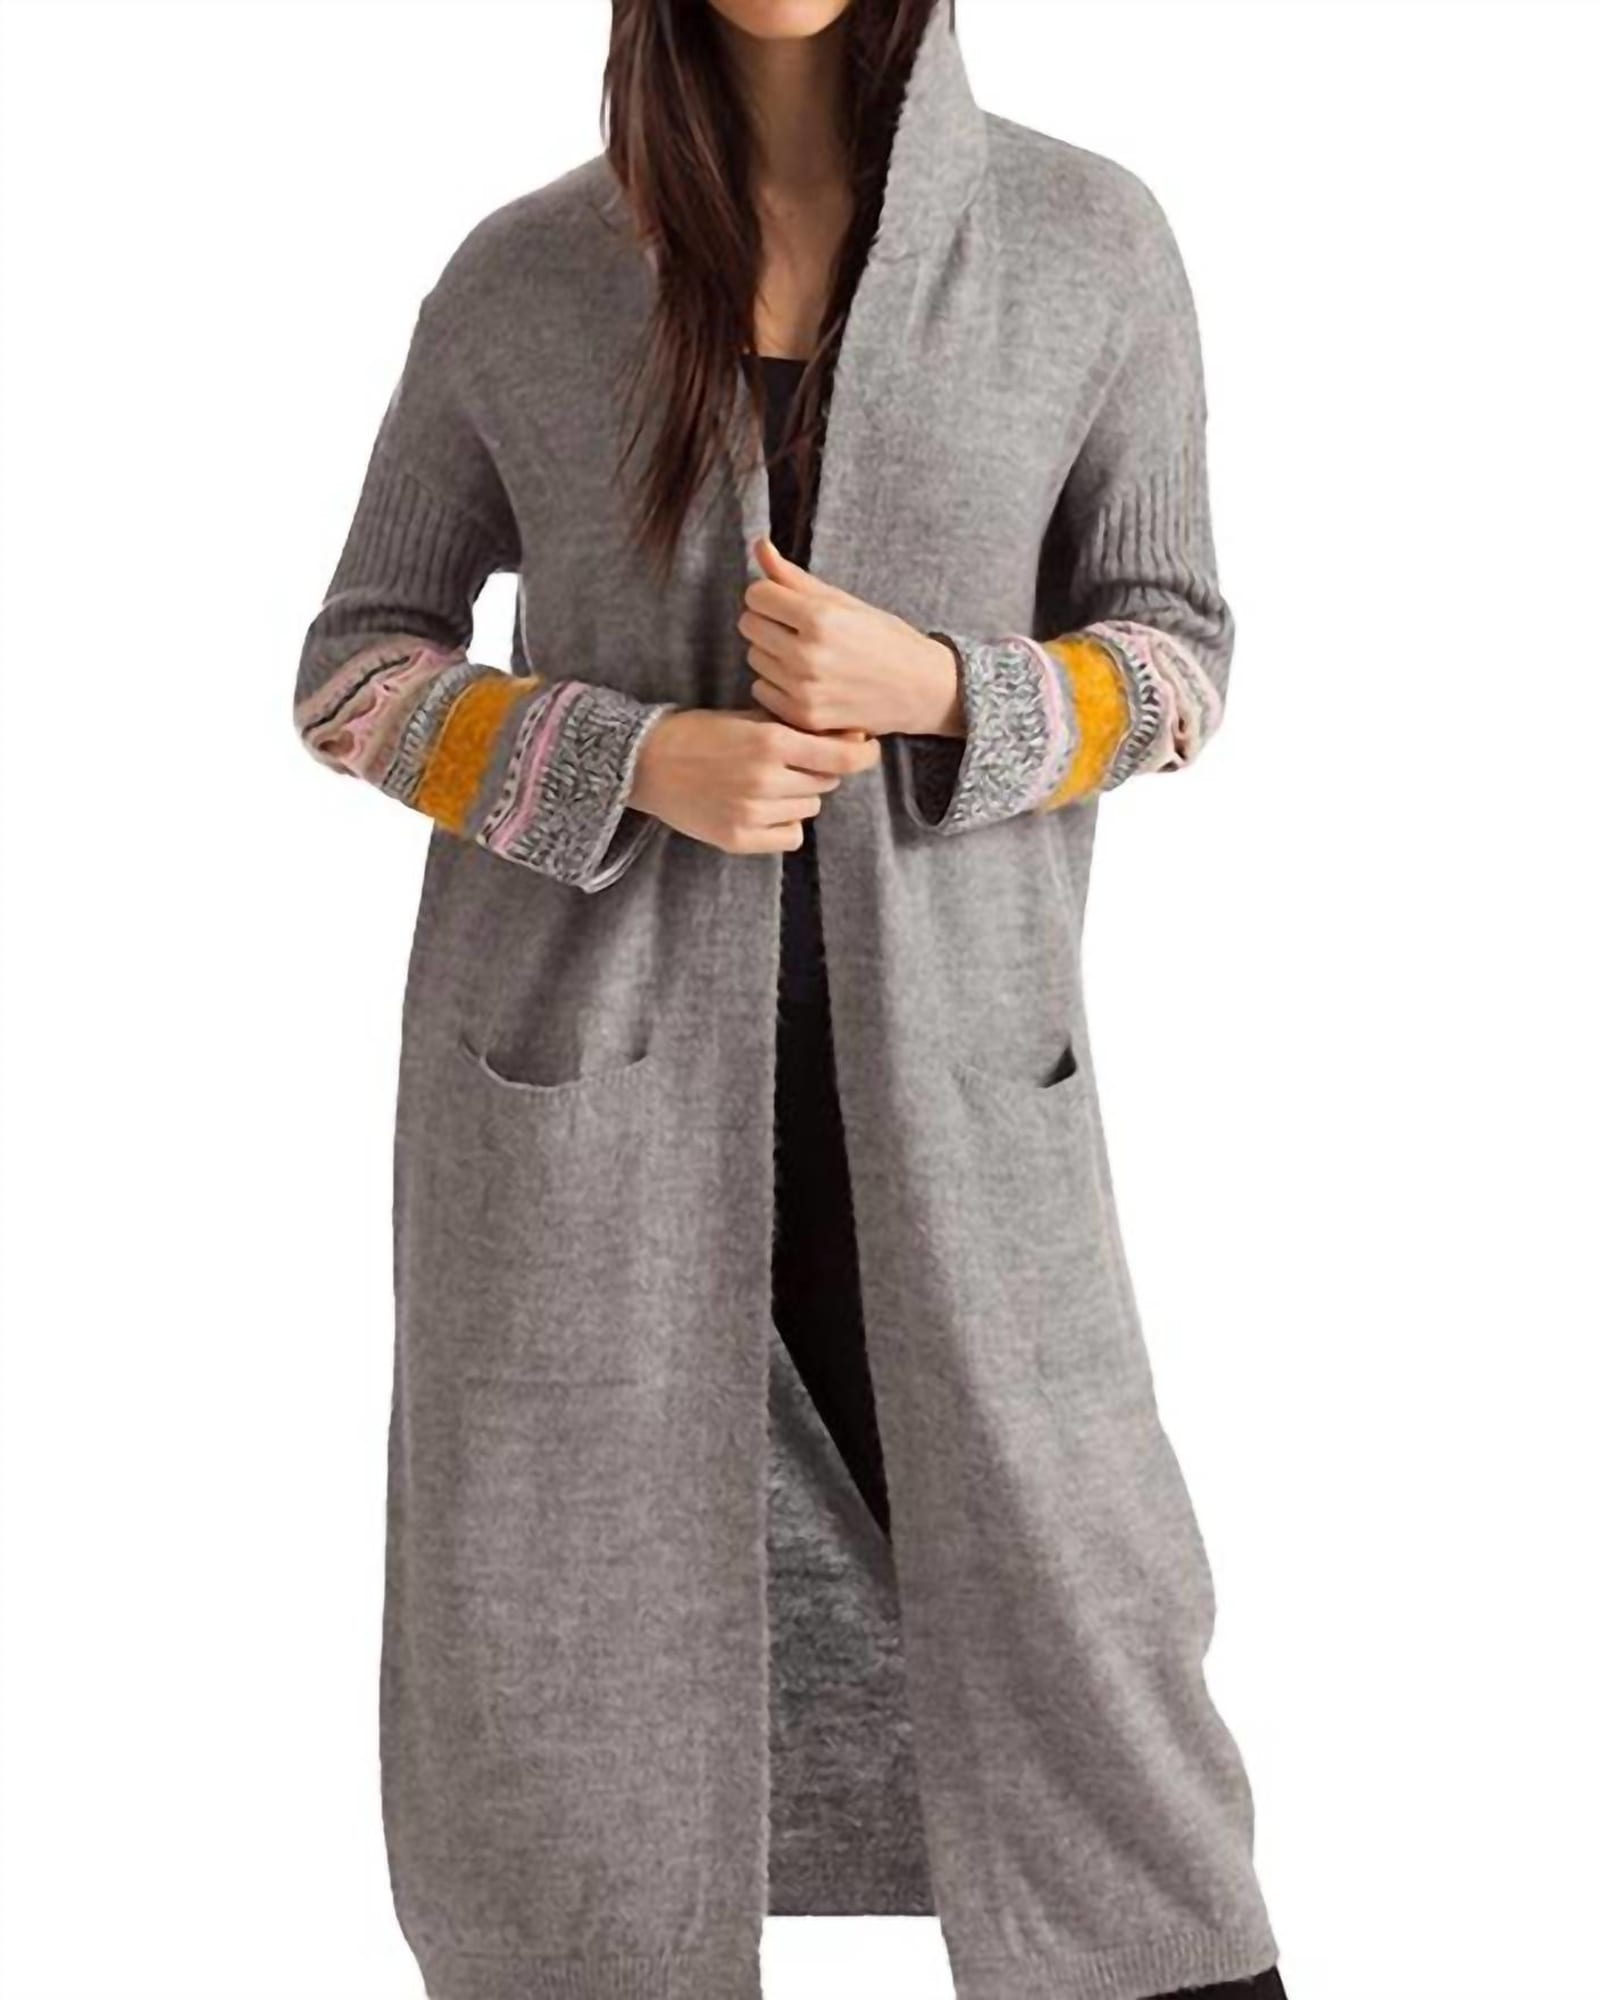 Natalia Long Cardigan With Hood in Gray Multi | Gray Multi